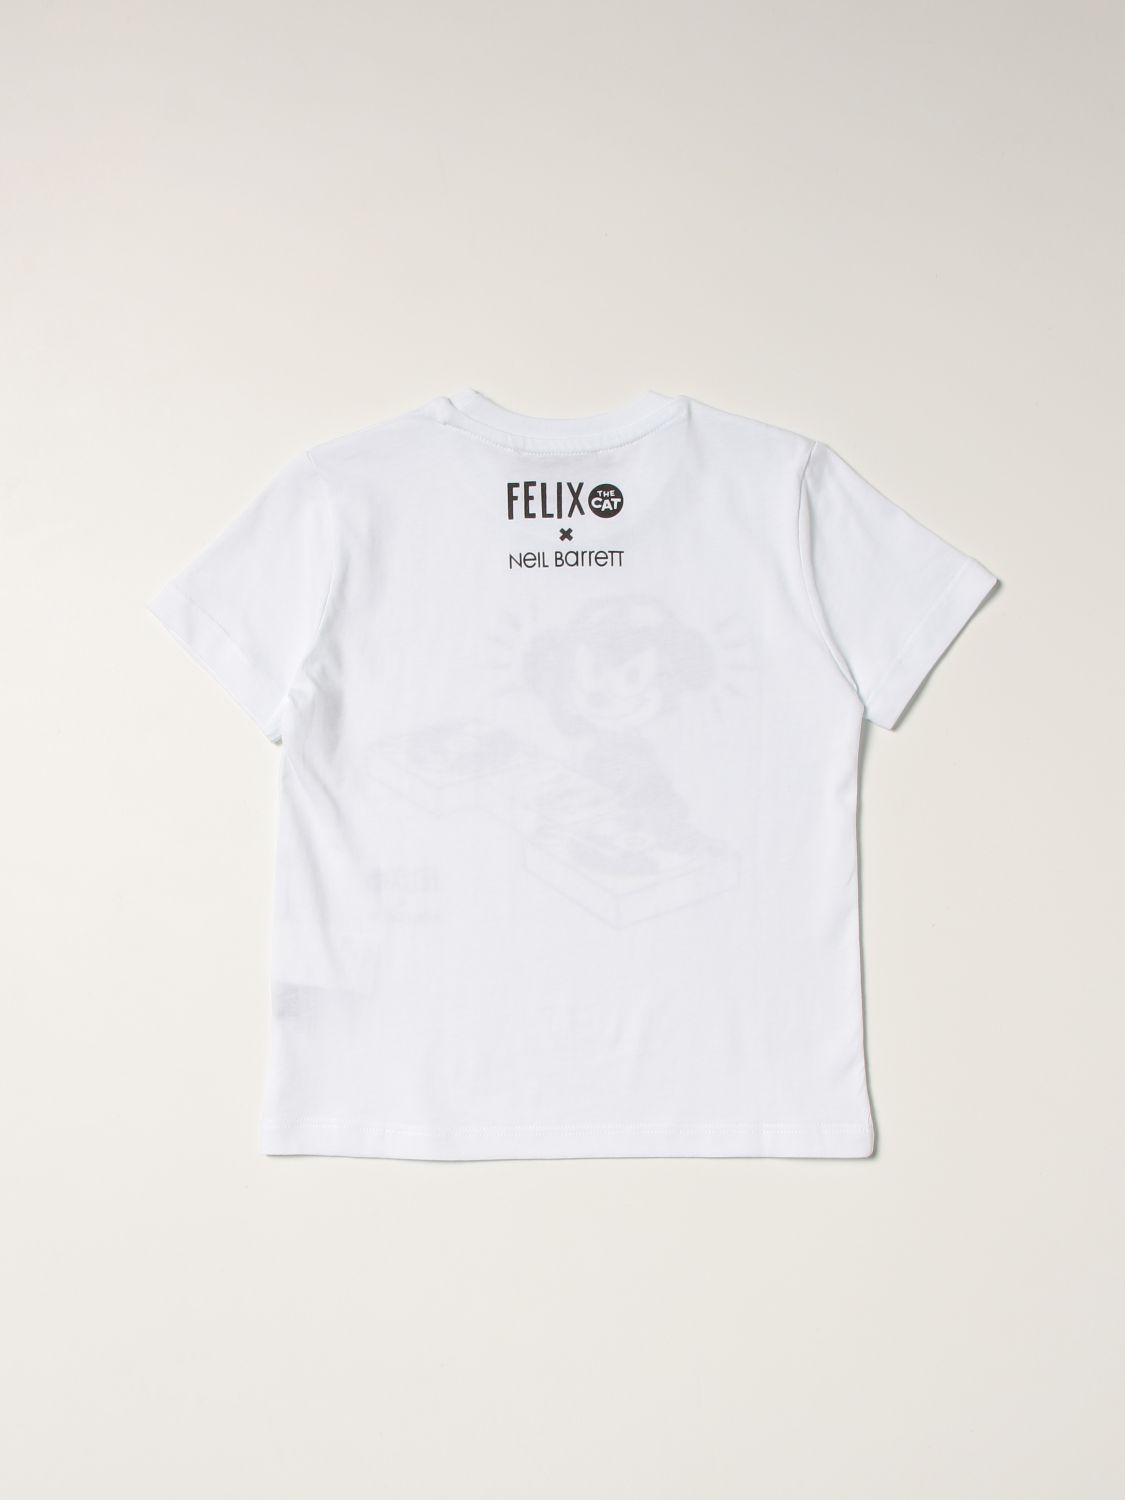 T-shirt Neil Barrett: Felix the cat x Neil Barrett t-shirt with graphic print white 2